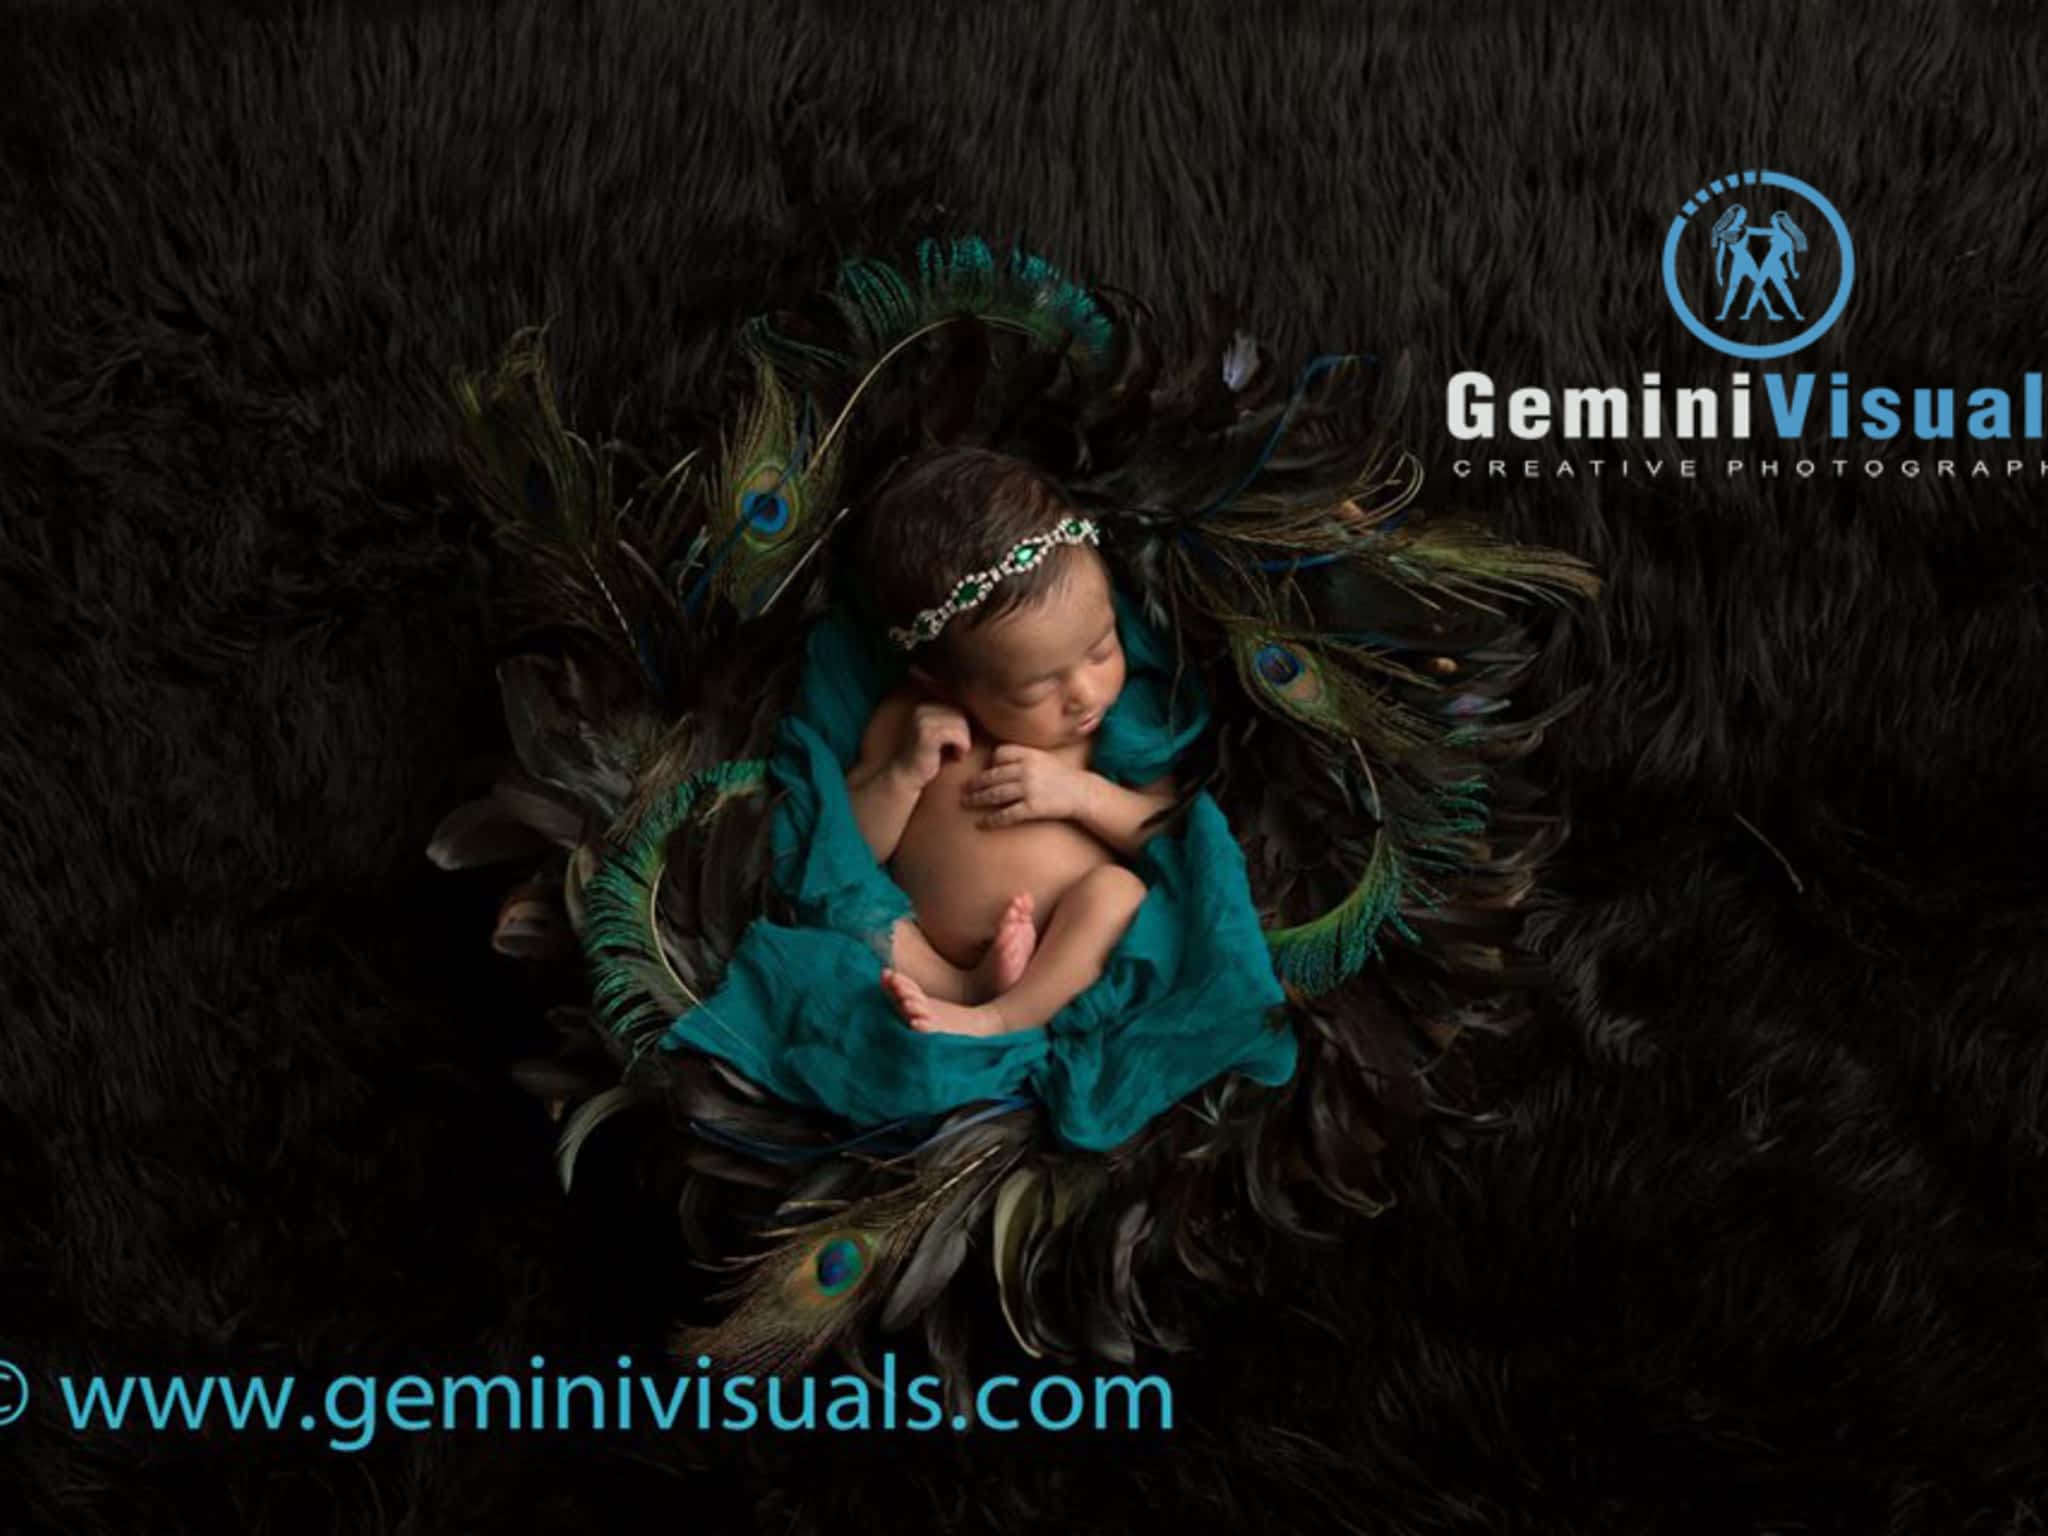 photo Gemini Visuals Creative Photography